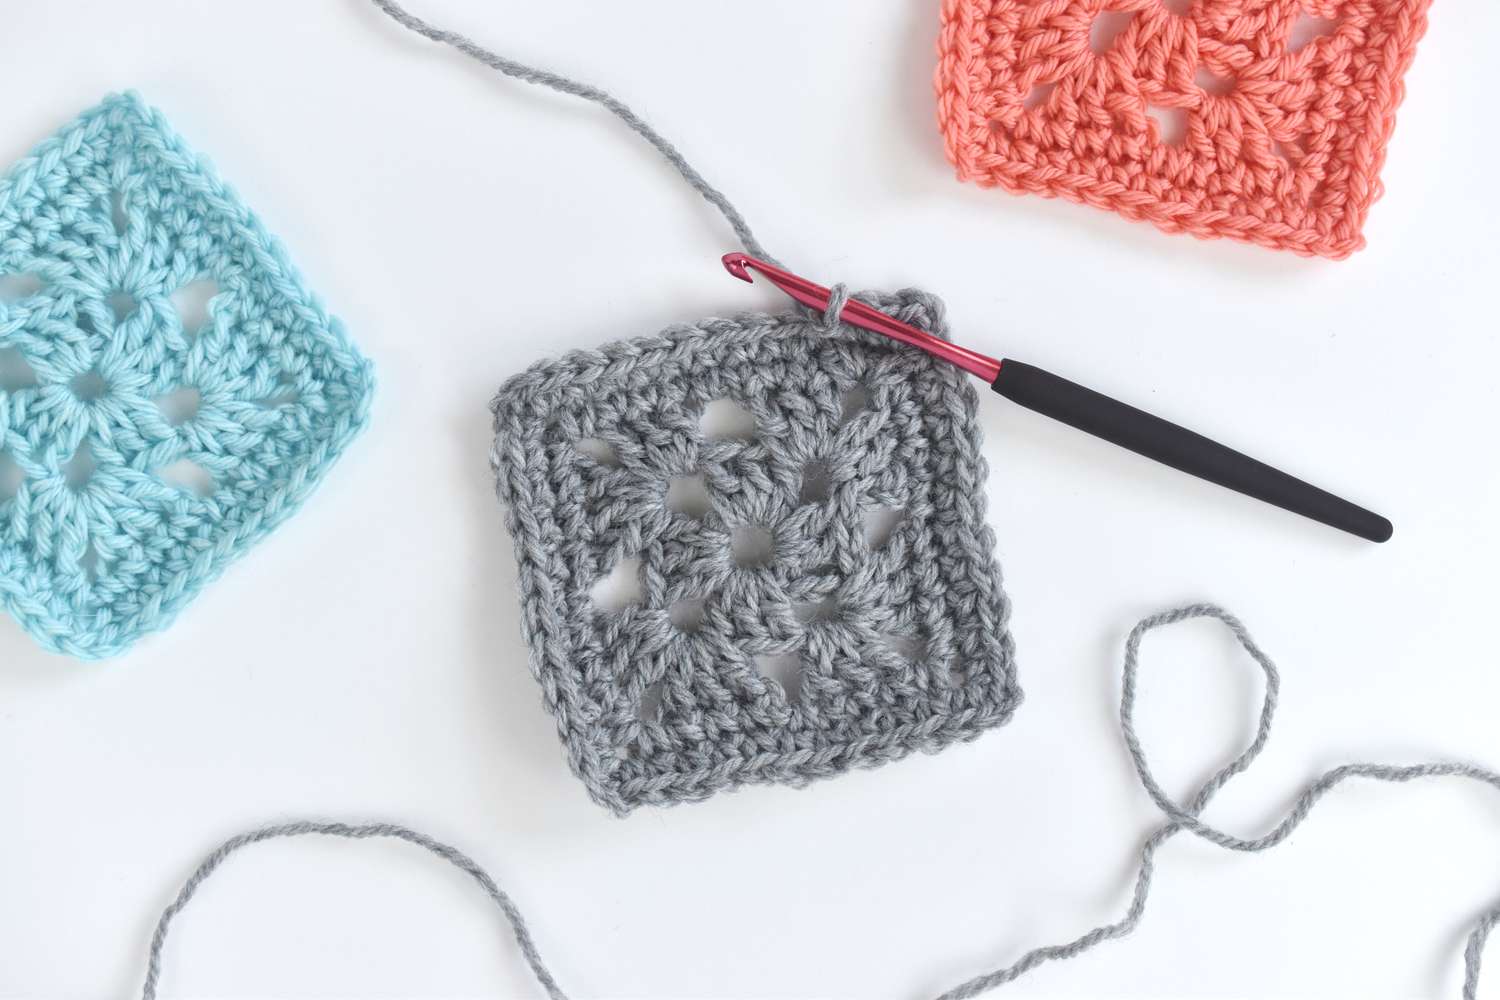 three crochet granny squares